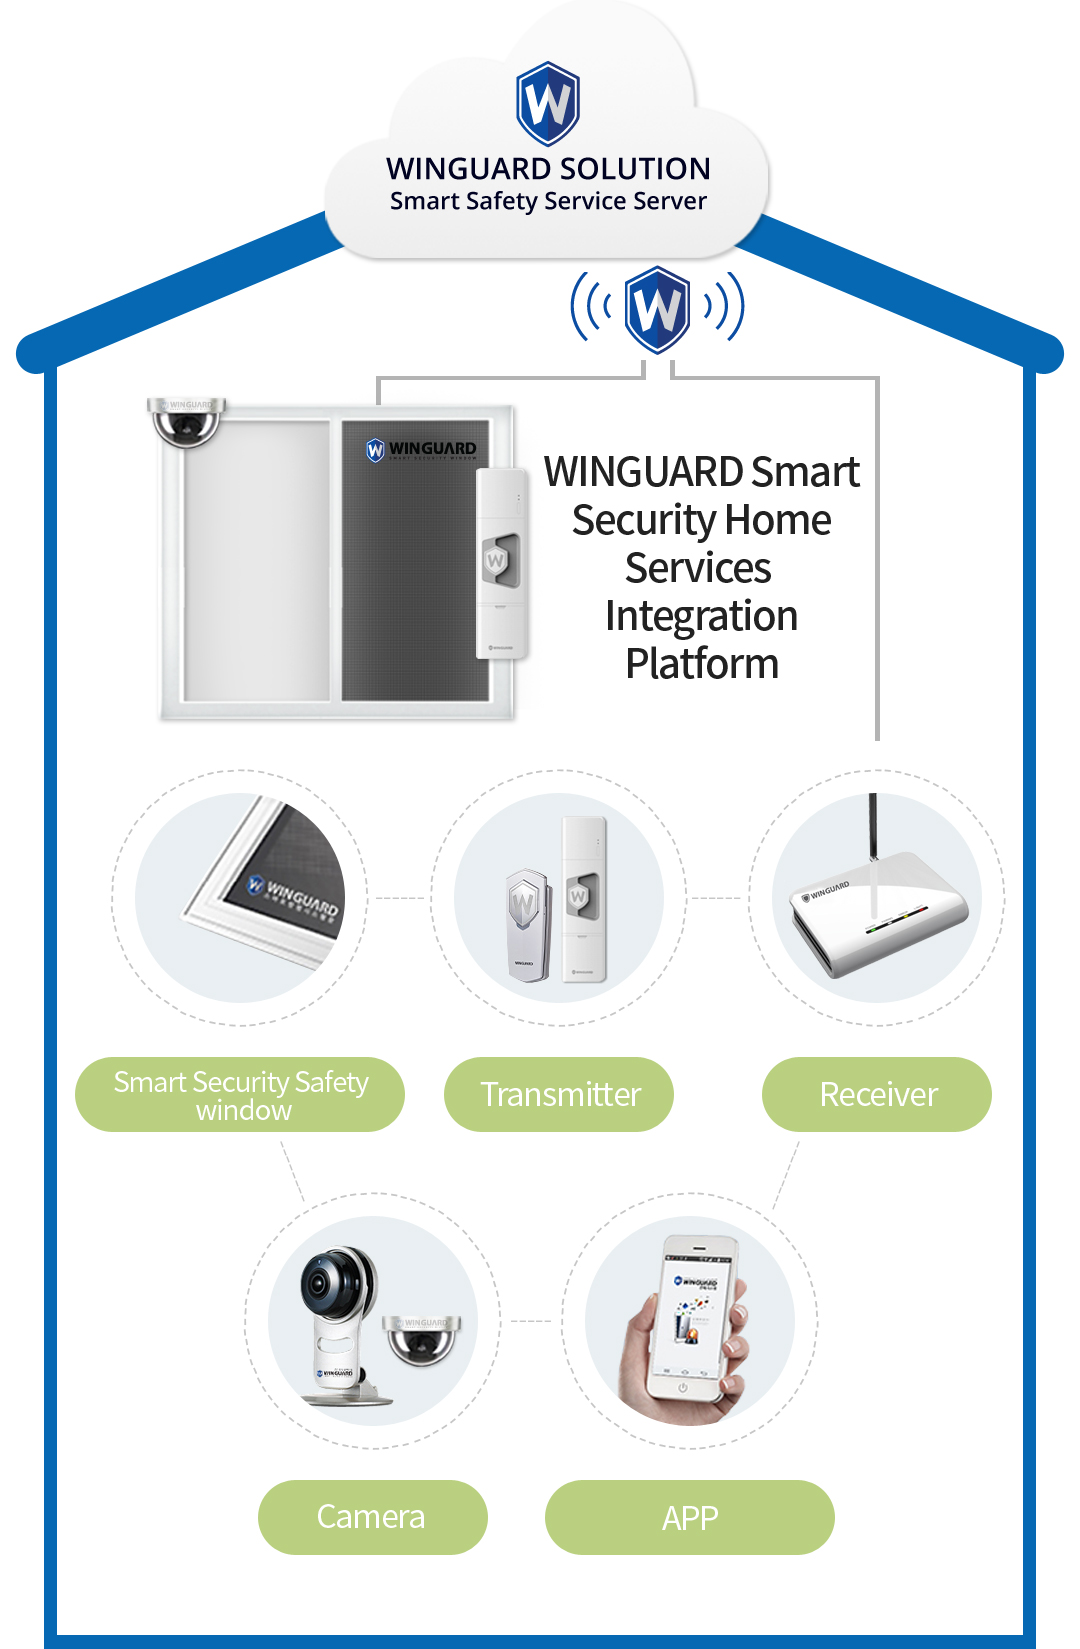 WINGUARD Smart Security Home Services Integration Platform